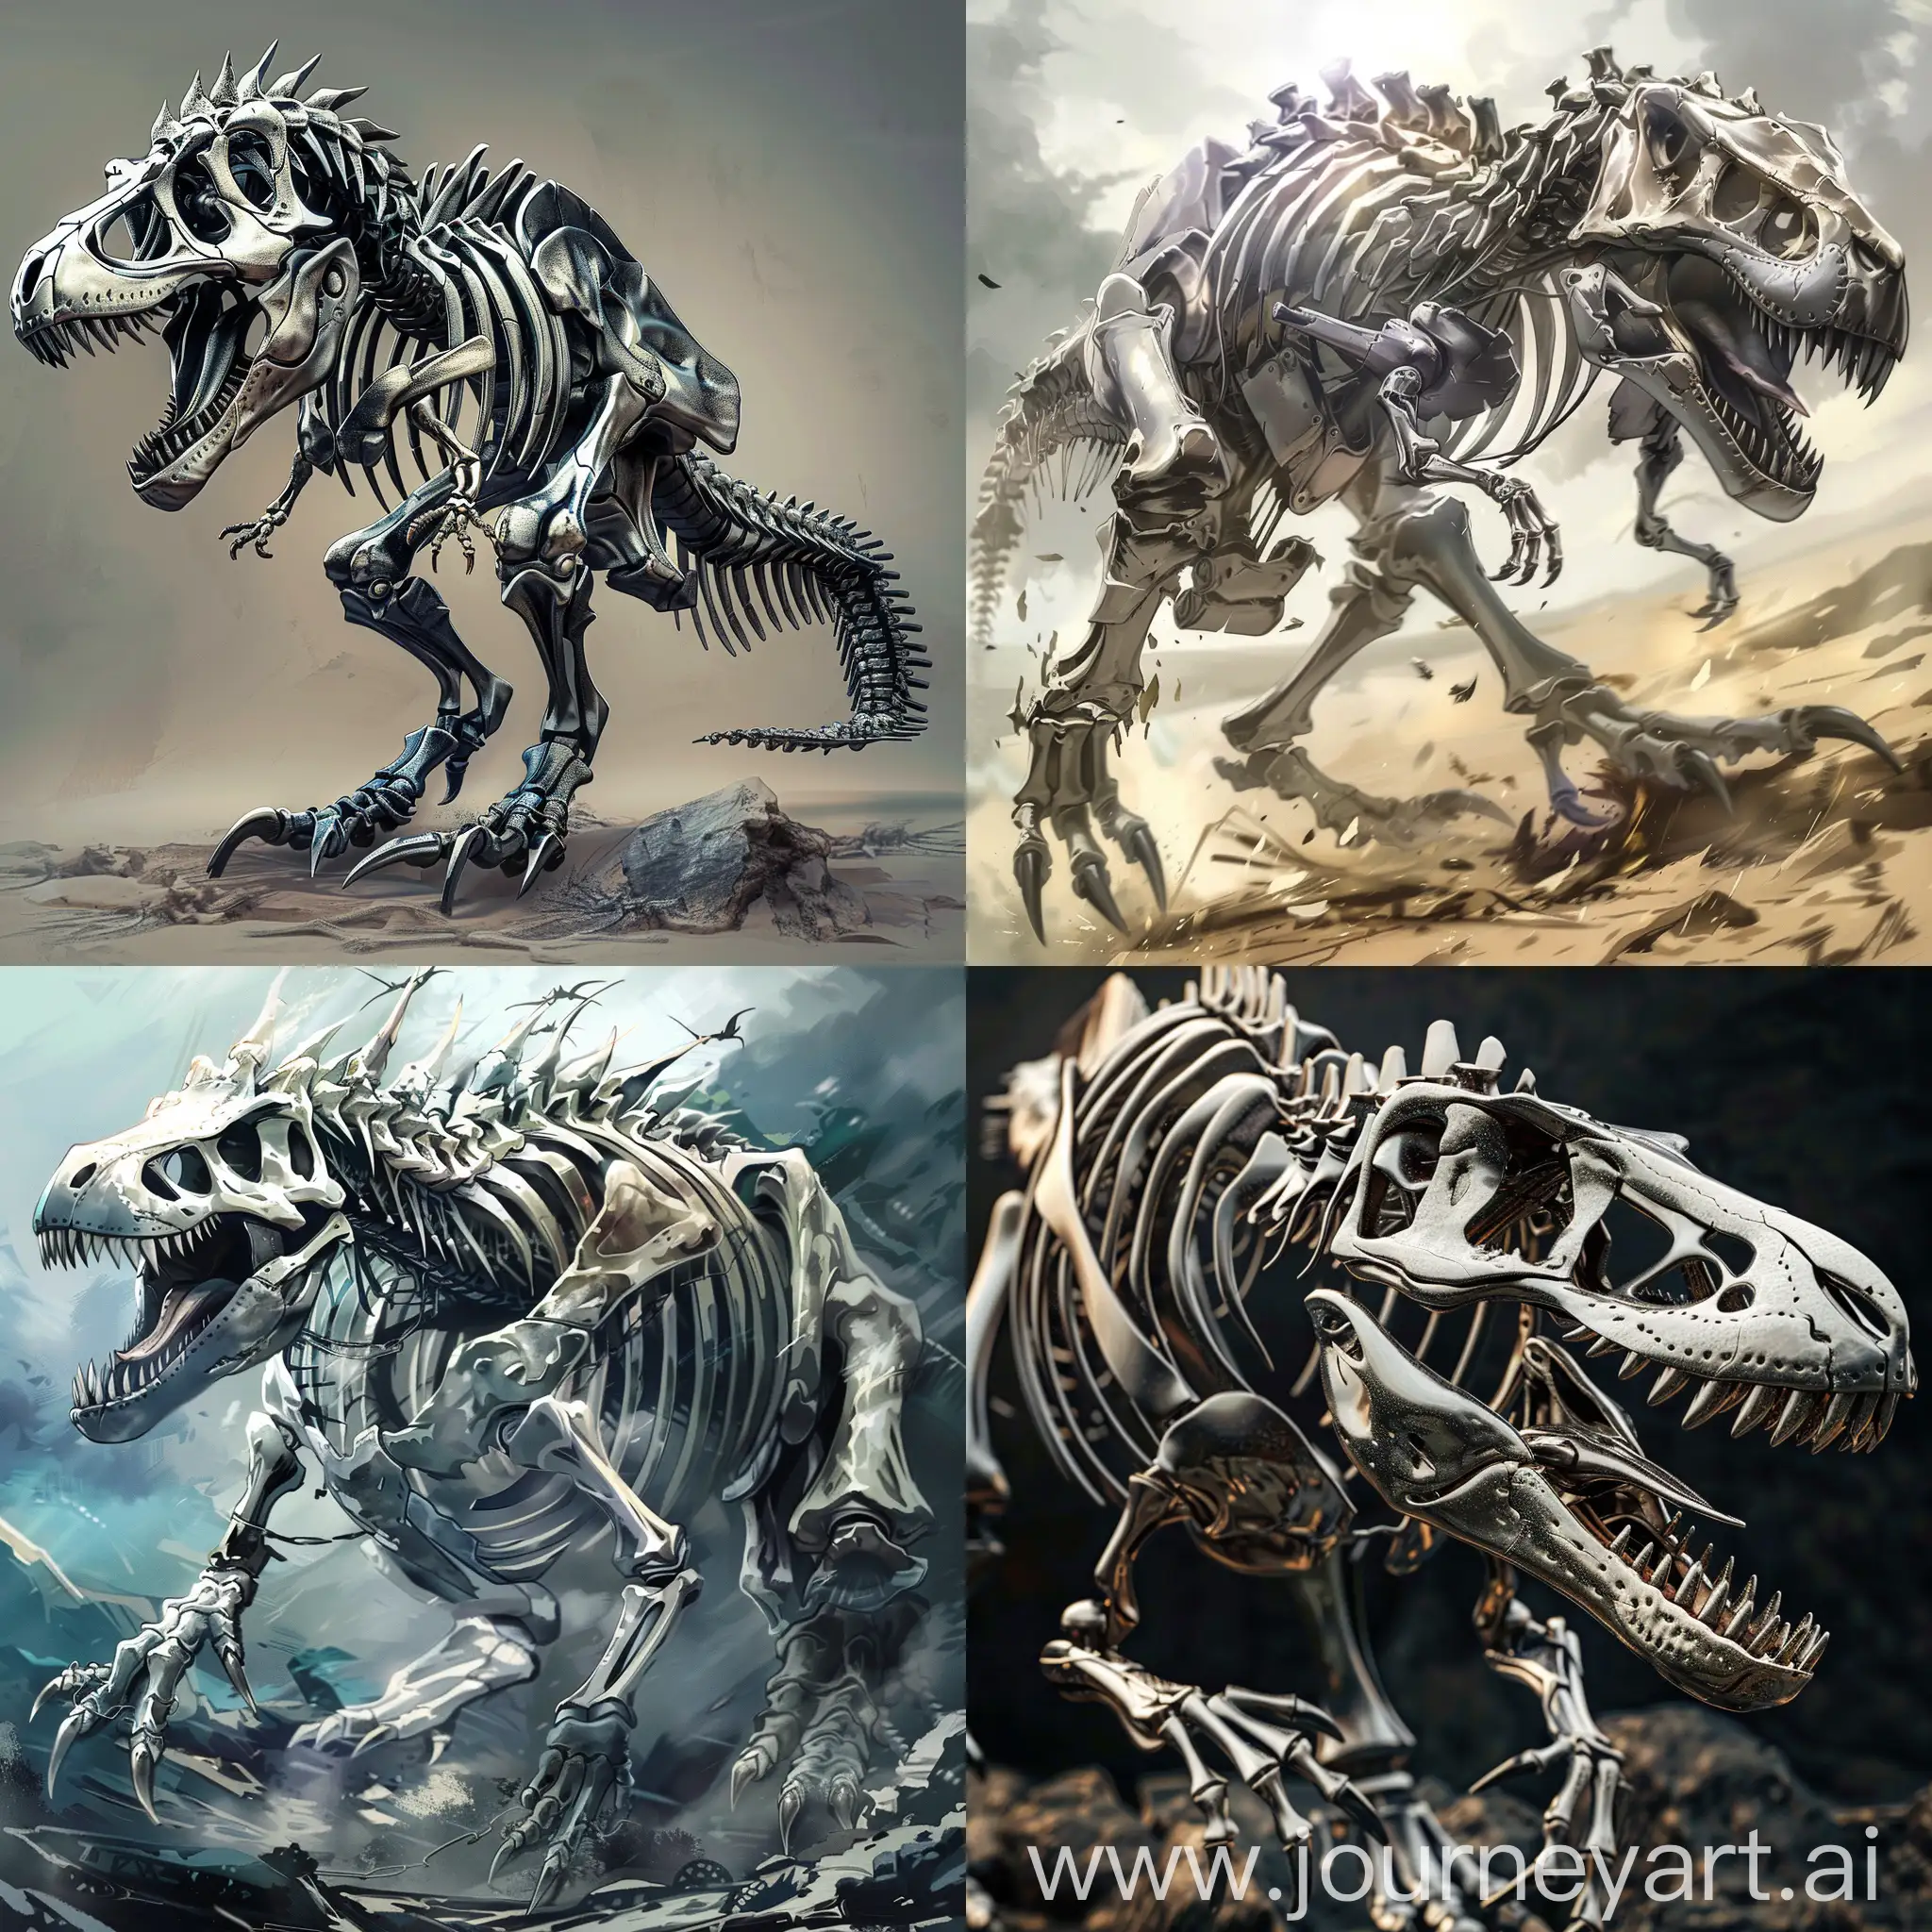 An anime style terrifying, powerful and giant metal silver tyranosaurus bones monster.